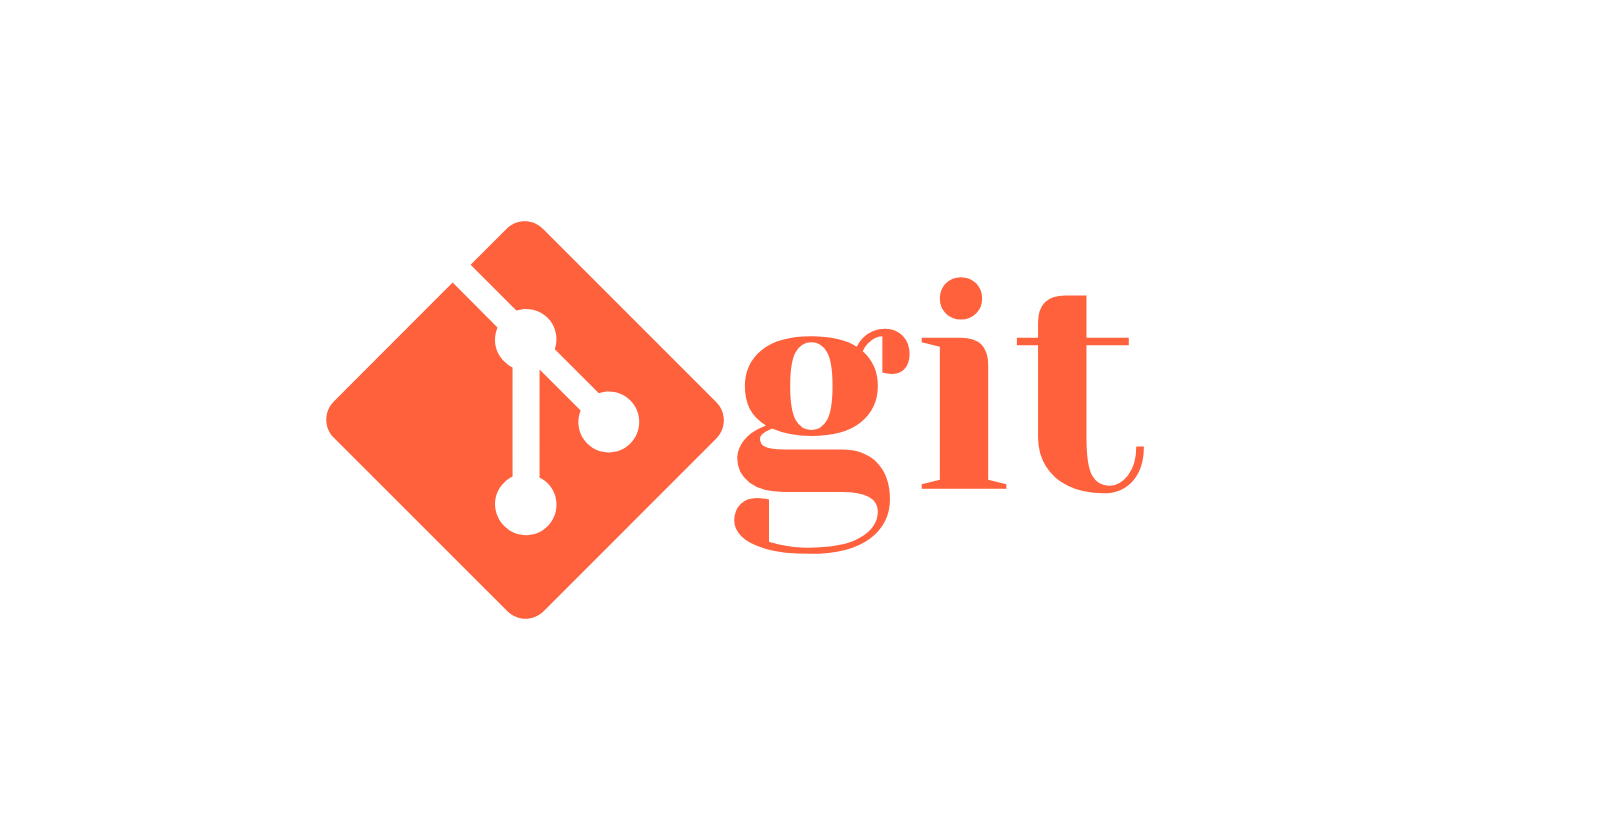 Git - Version Control